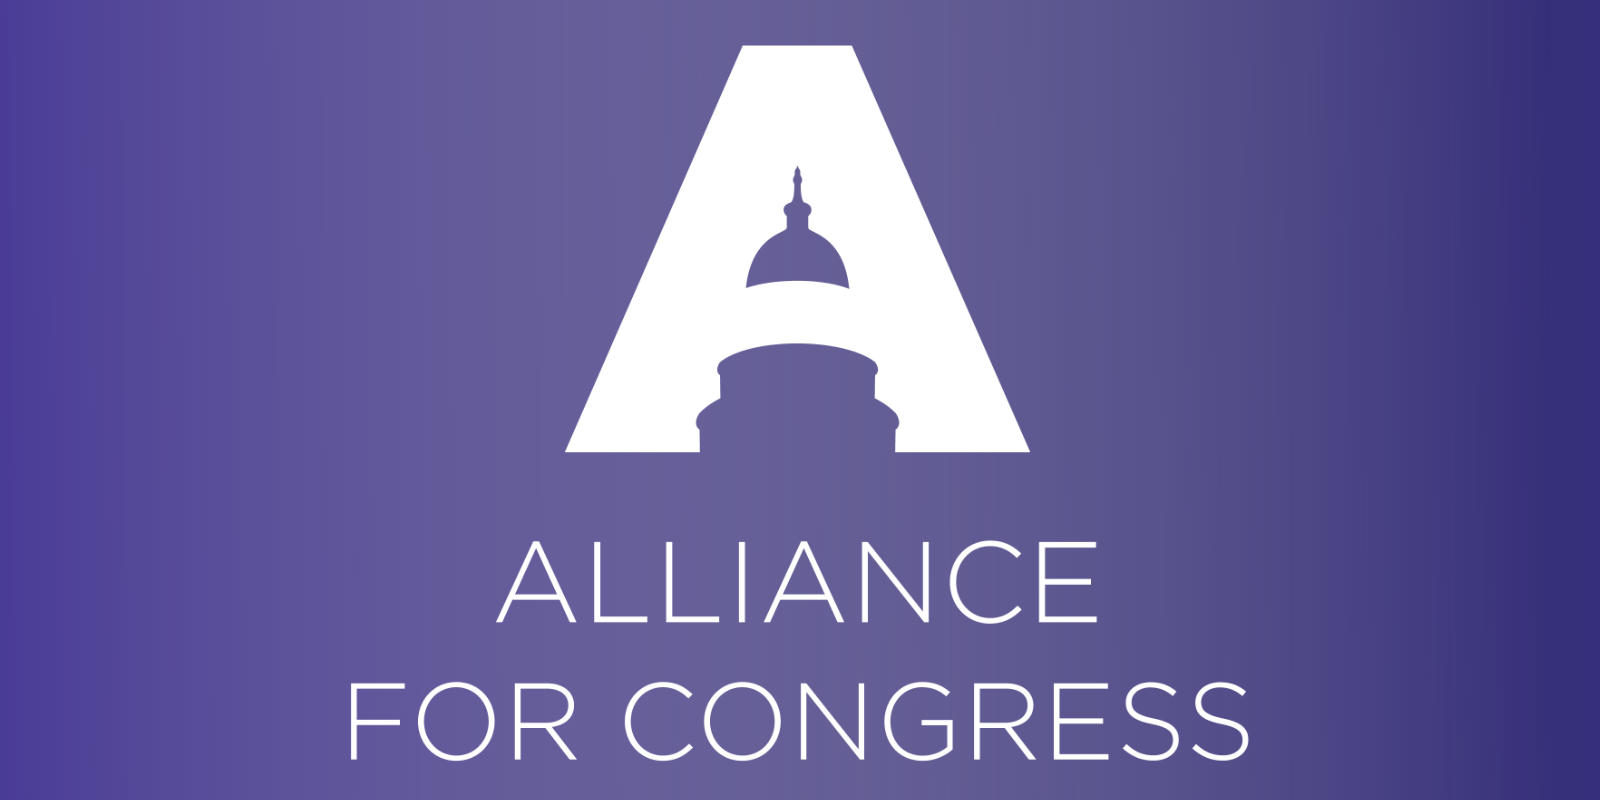 Alliance for Congress logo